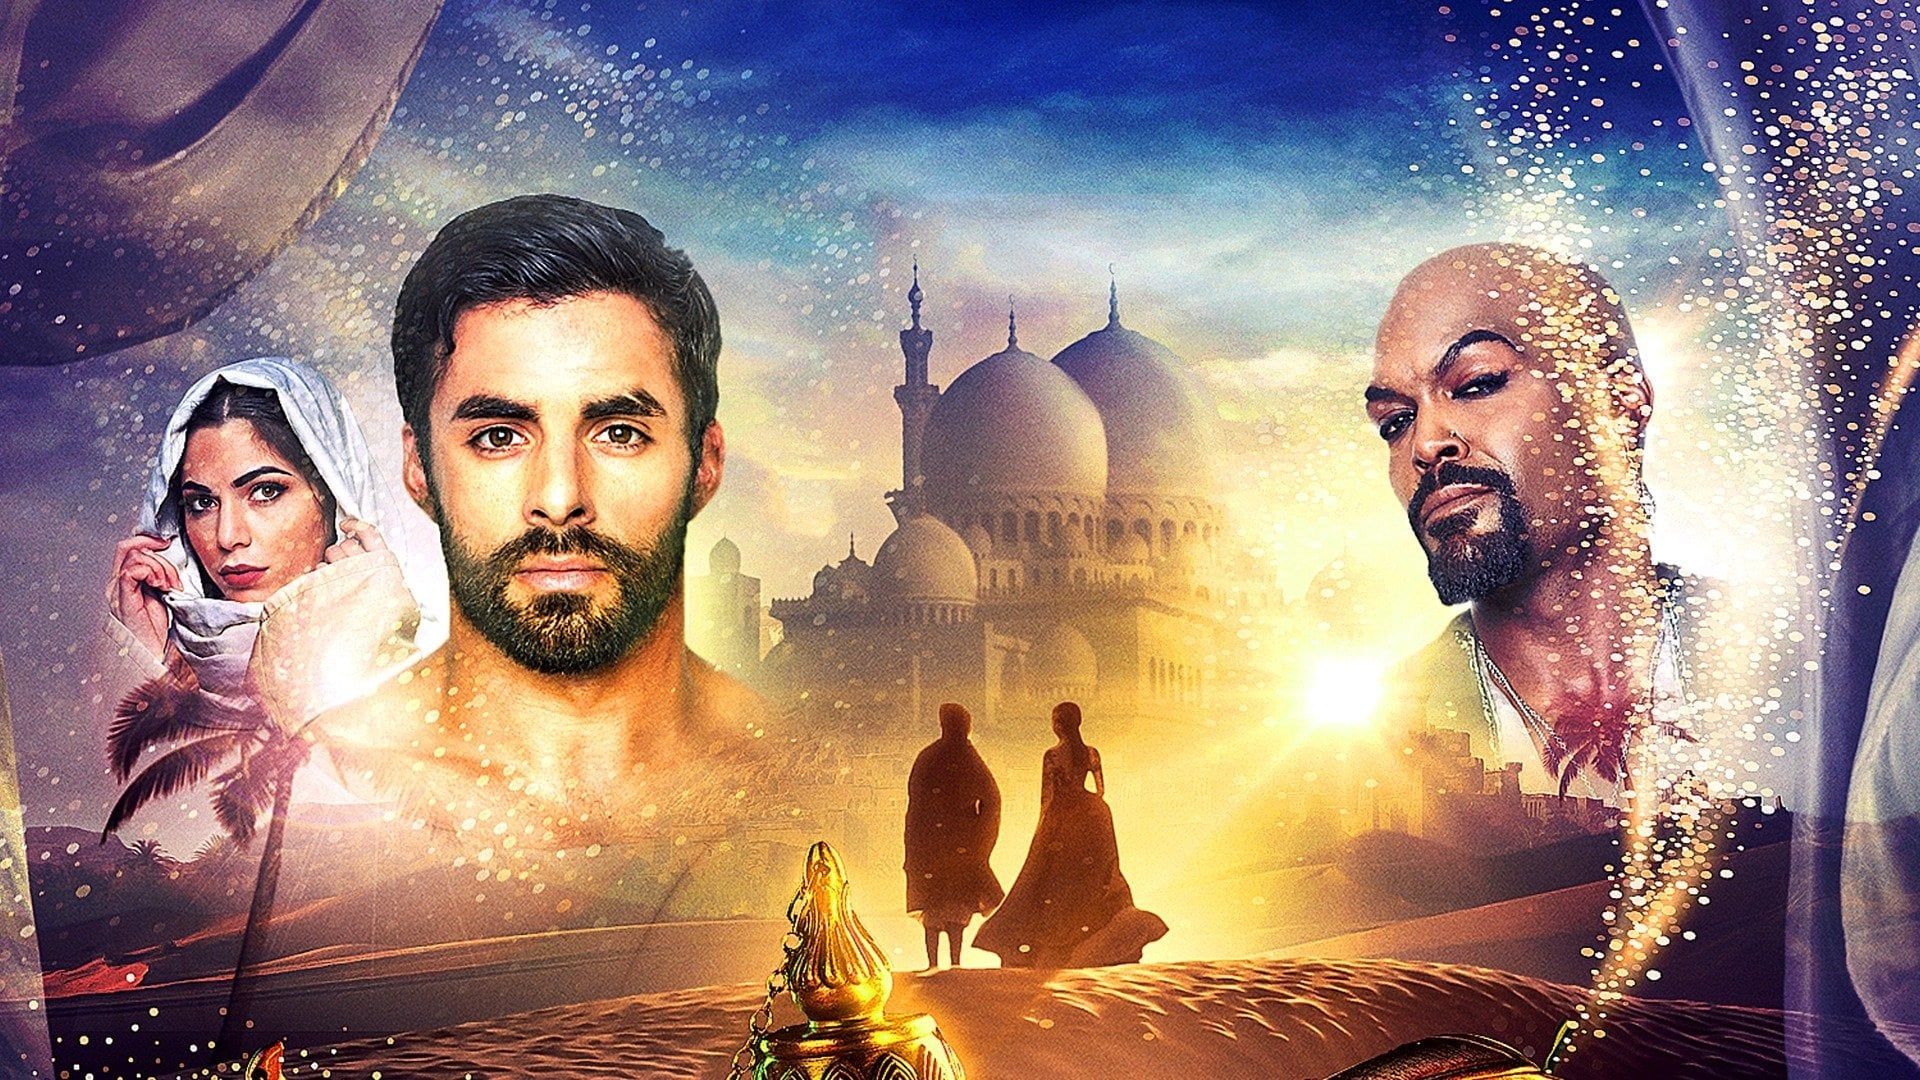 Adventures of Aladdin background